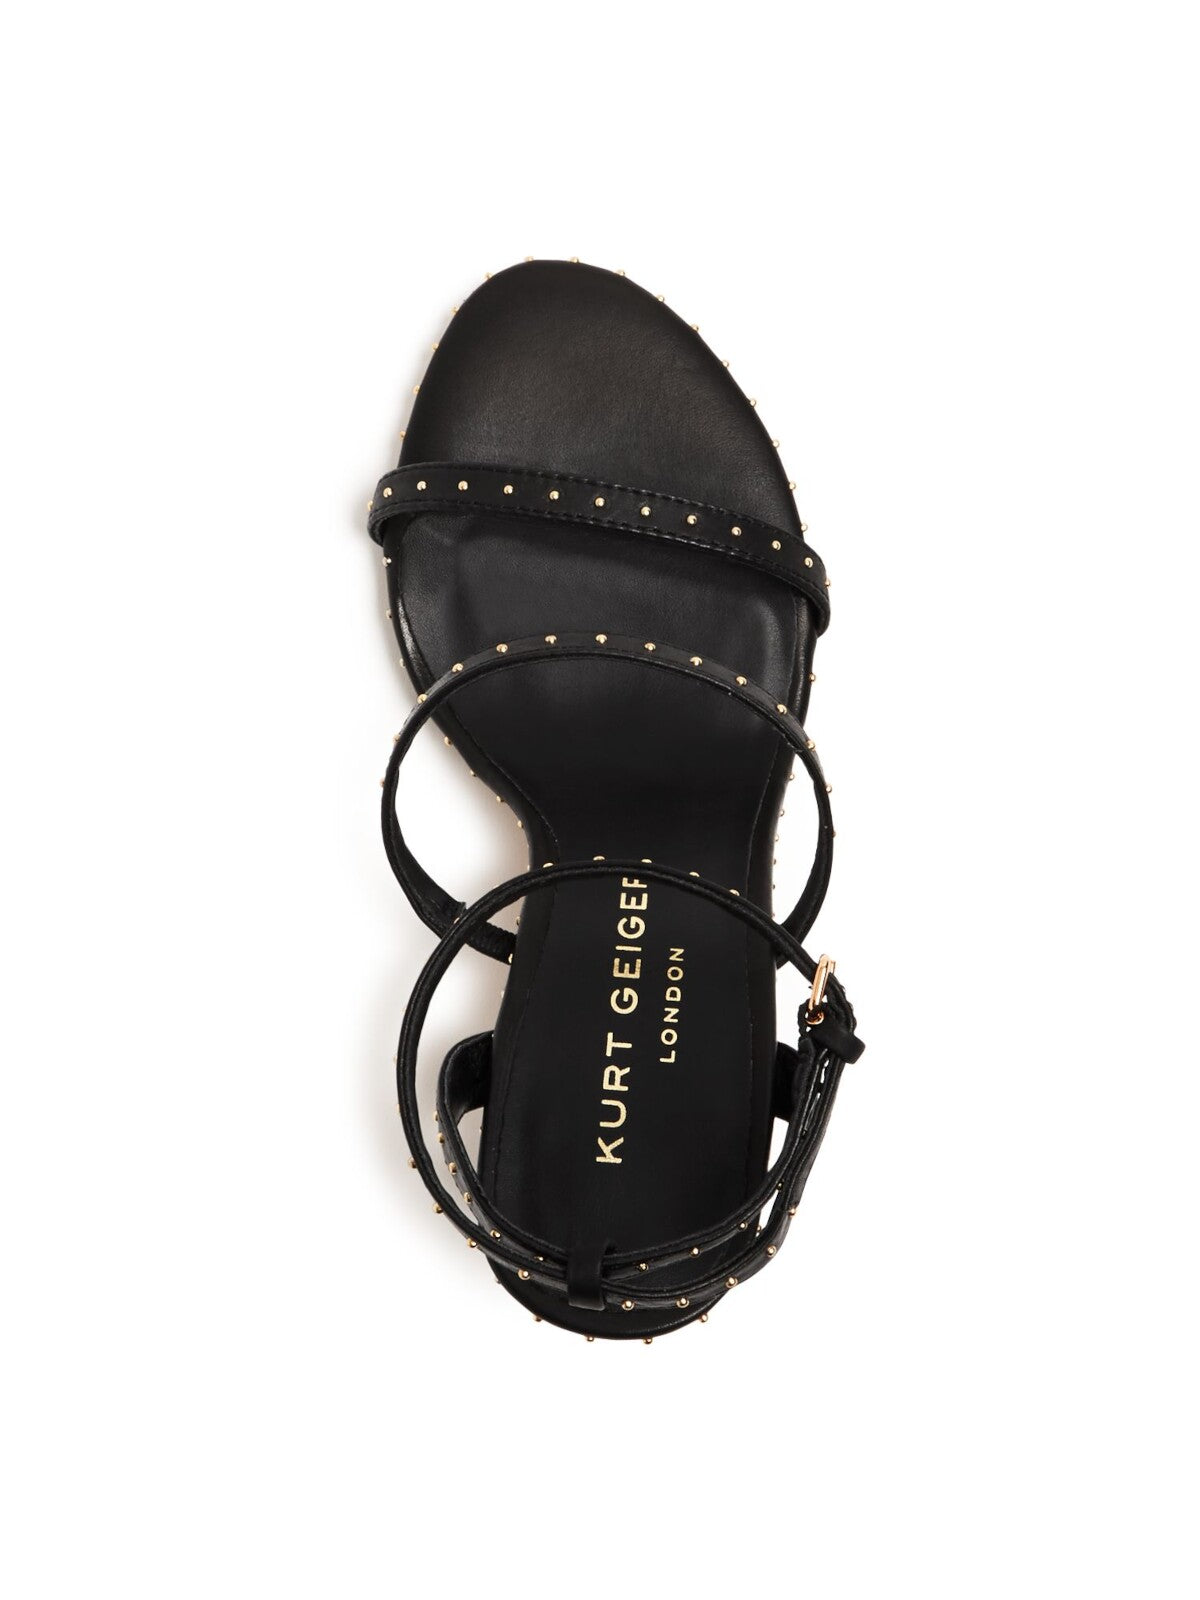 KURT GEIGER Womens Black Ankle Strap Studded Portia Round Toe Stiletto Buckle Leather Dress Sandals Shoes